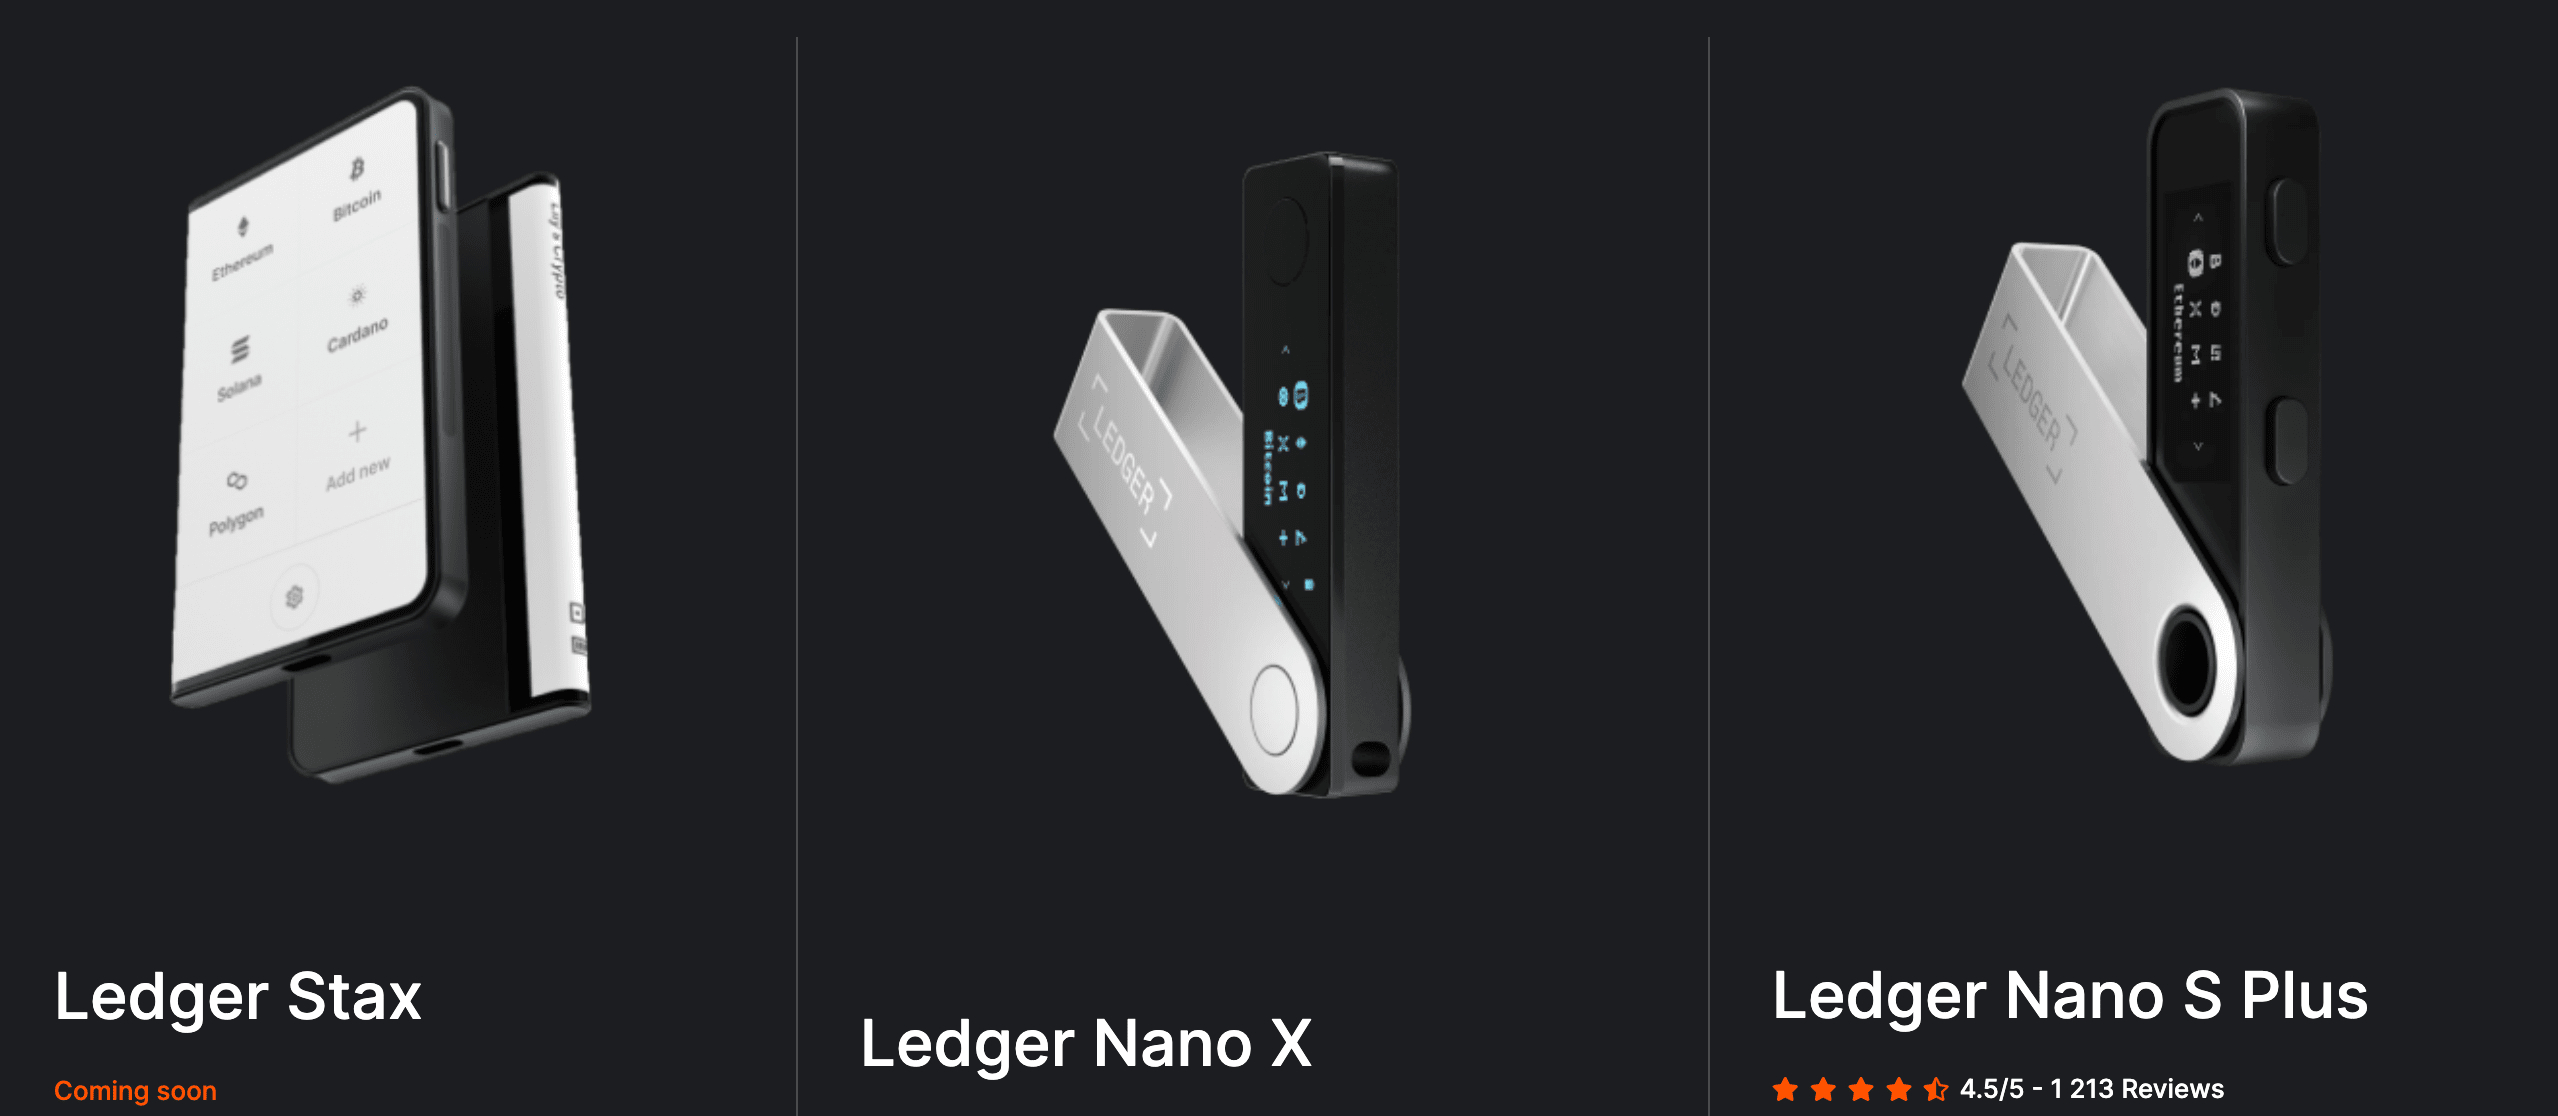 Ledger hardware wallet devices